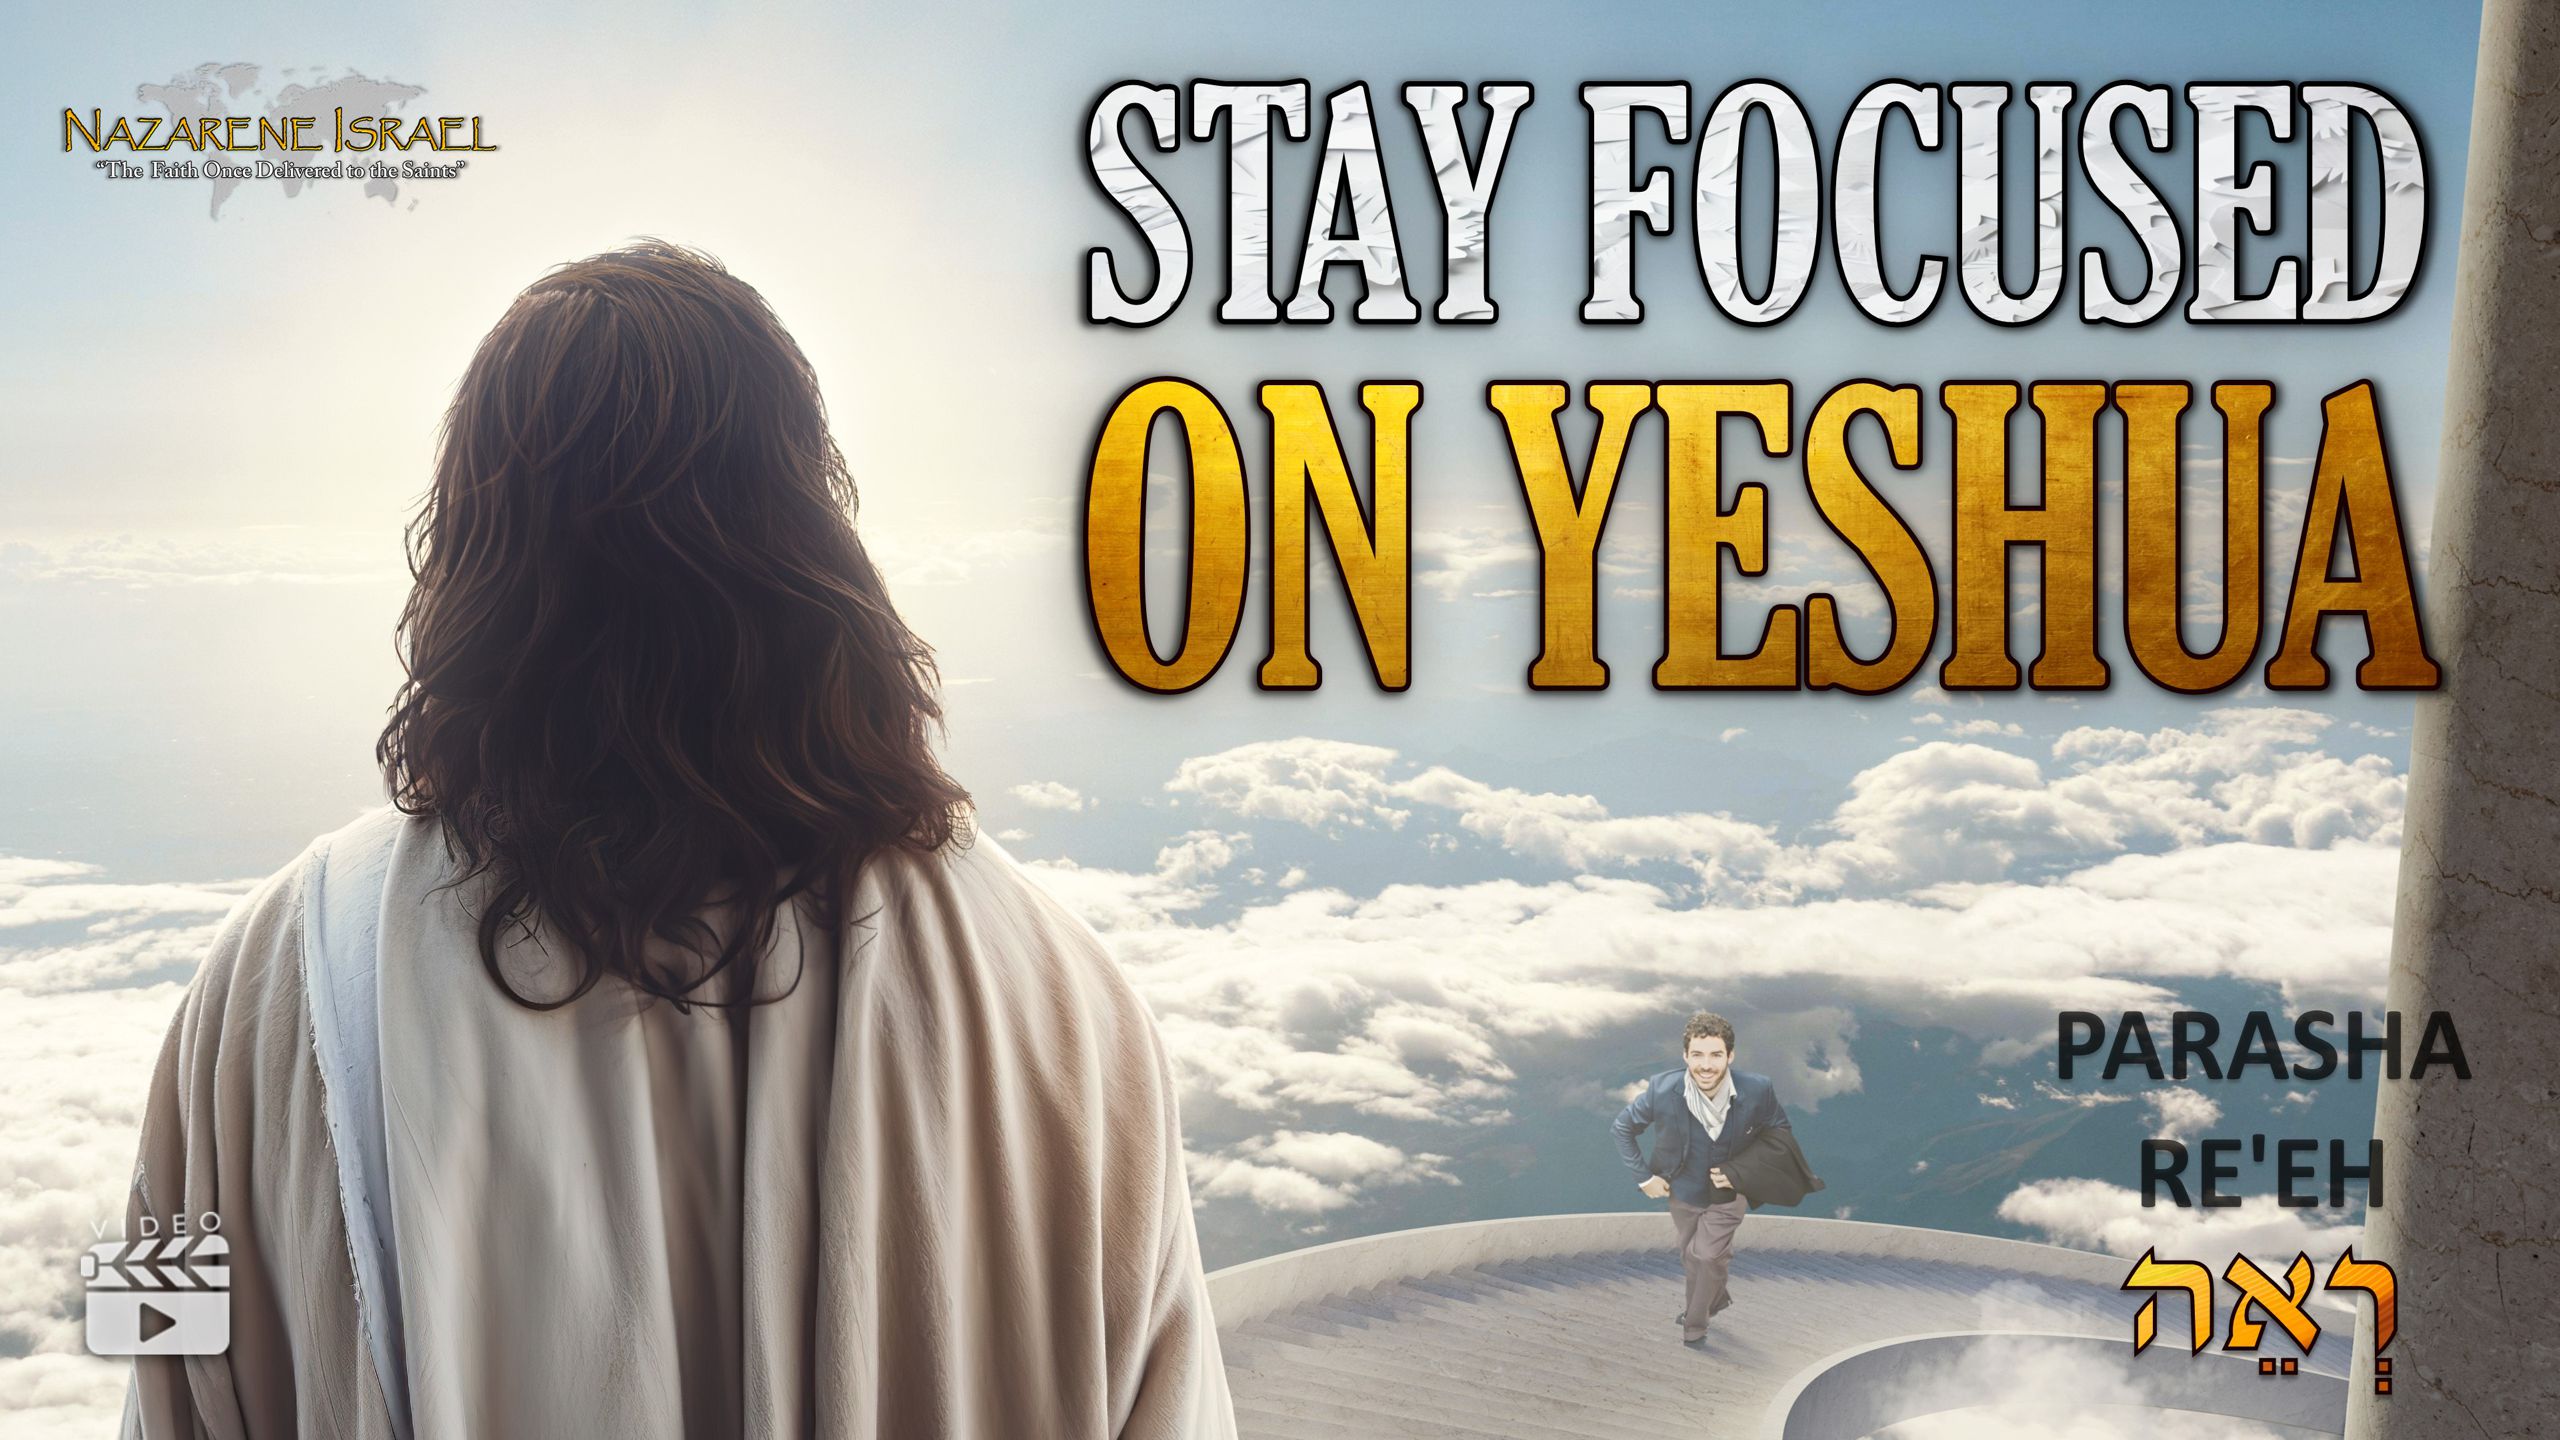 Parasha Re’eh – Stay Focused on Yeshua